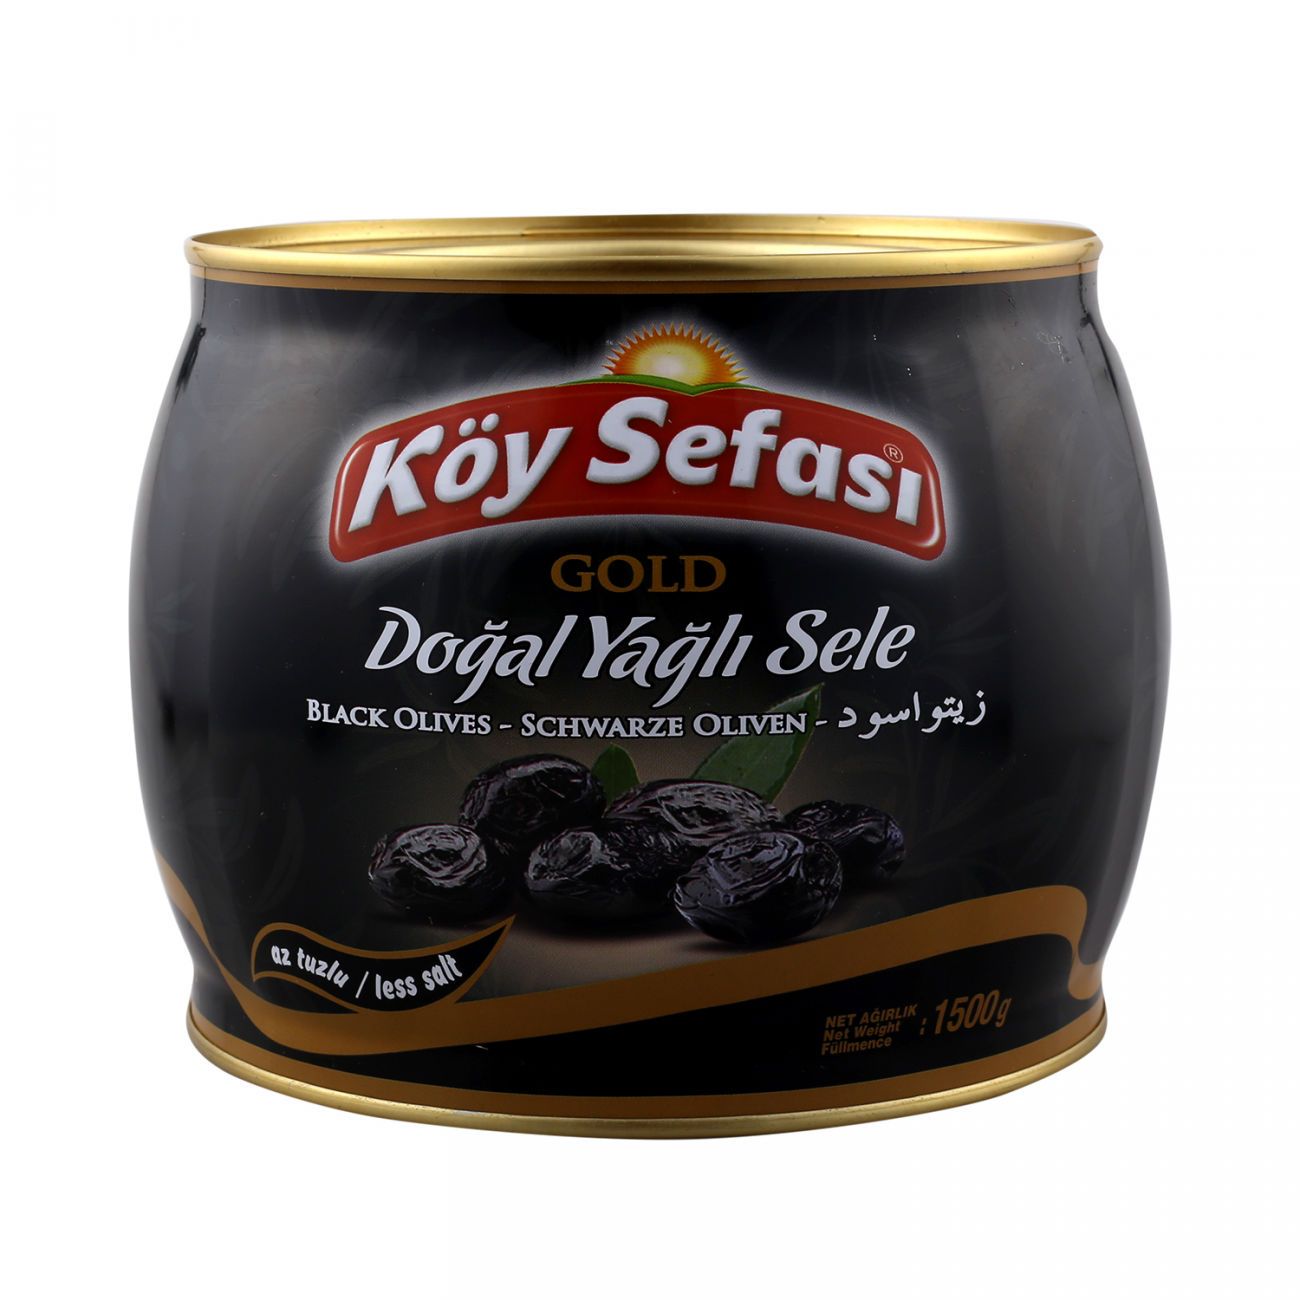 Koy Sefasi Dogal Yagli Sele Fici (1.5KG) - Aytac Foods